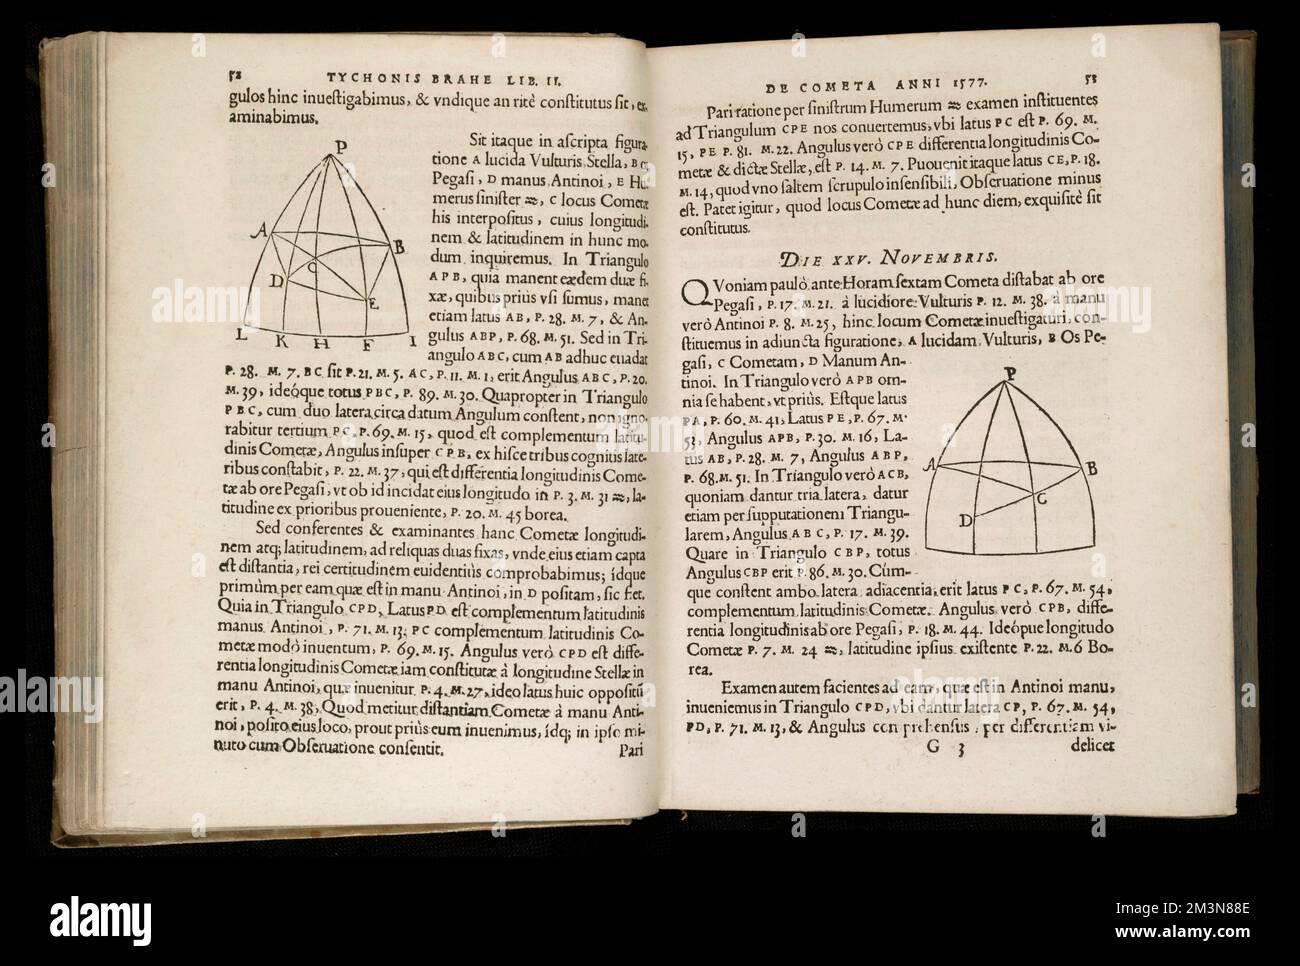 Tychonis Brahe De mundi aetherei recentioribus phaenomenis liber secundus, by Tycho Brahe; published 1603 Stock Photo